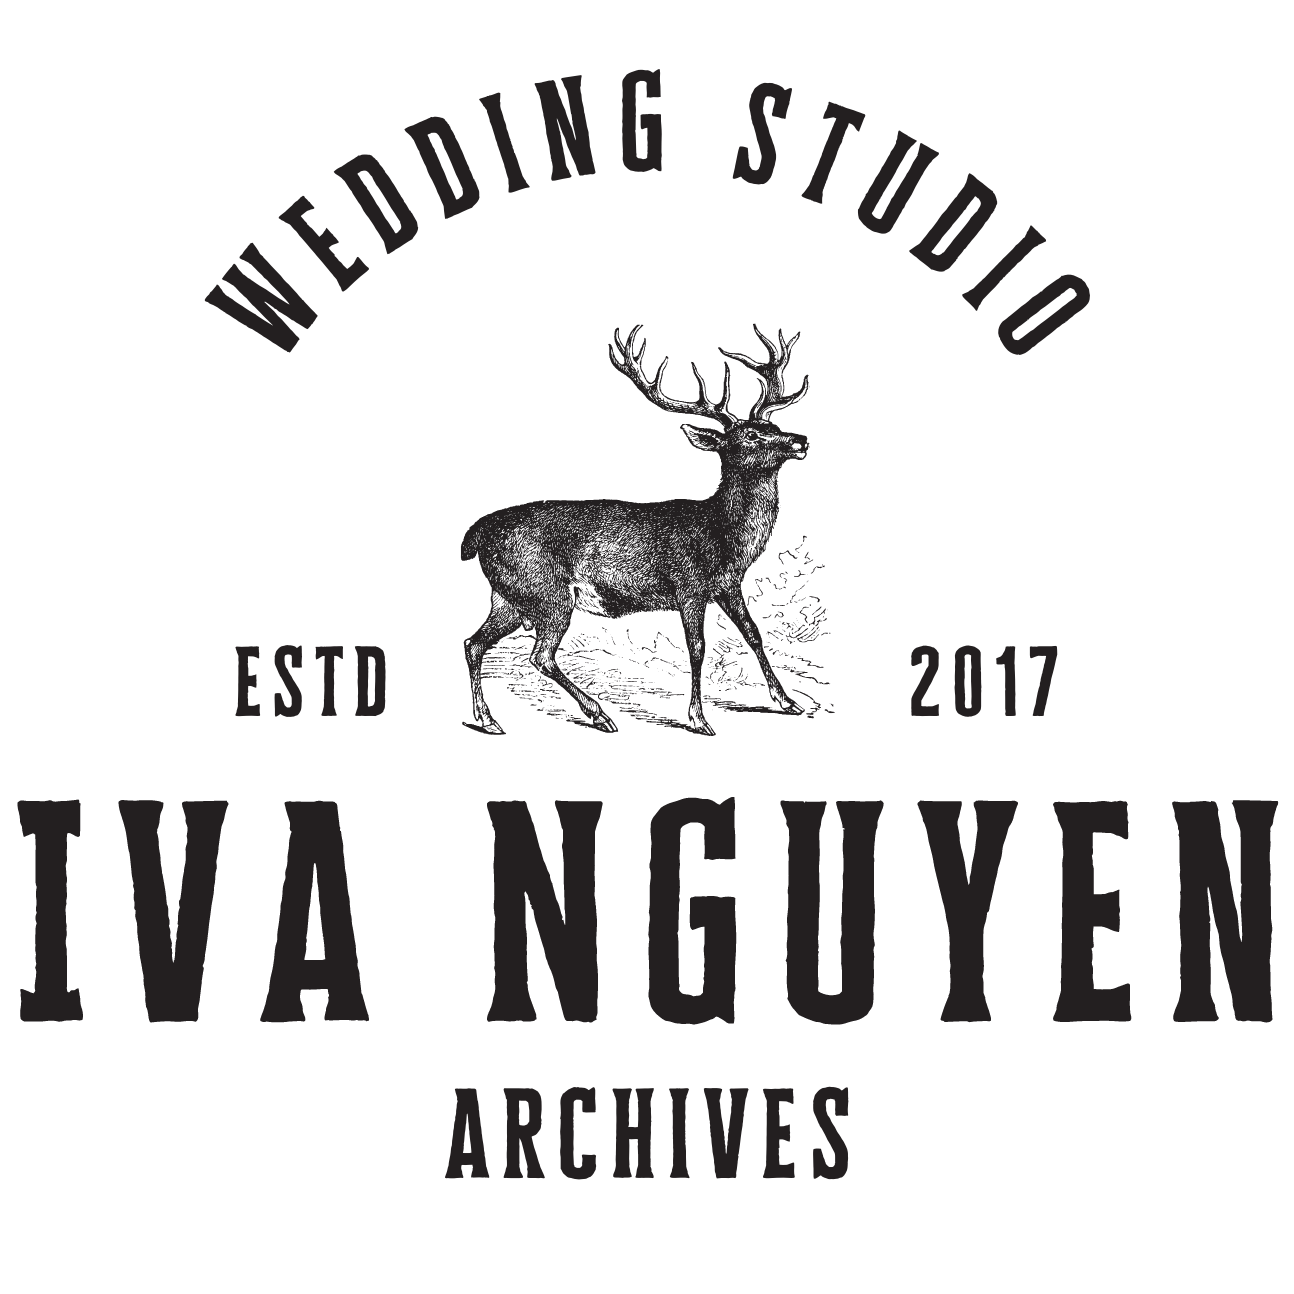 Iva Nguyen Archives